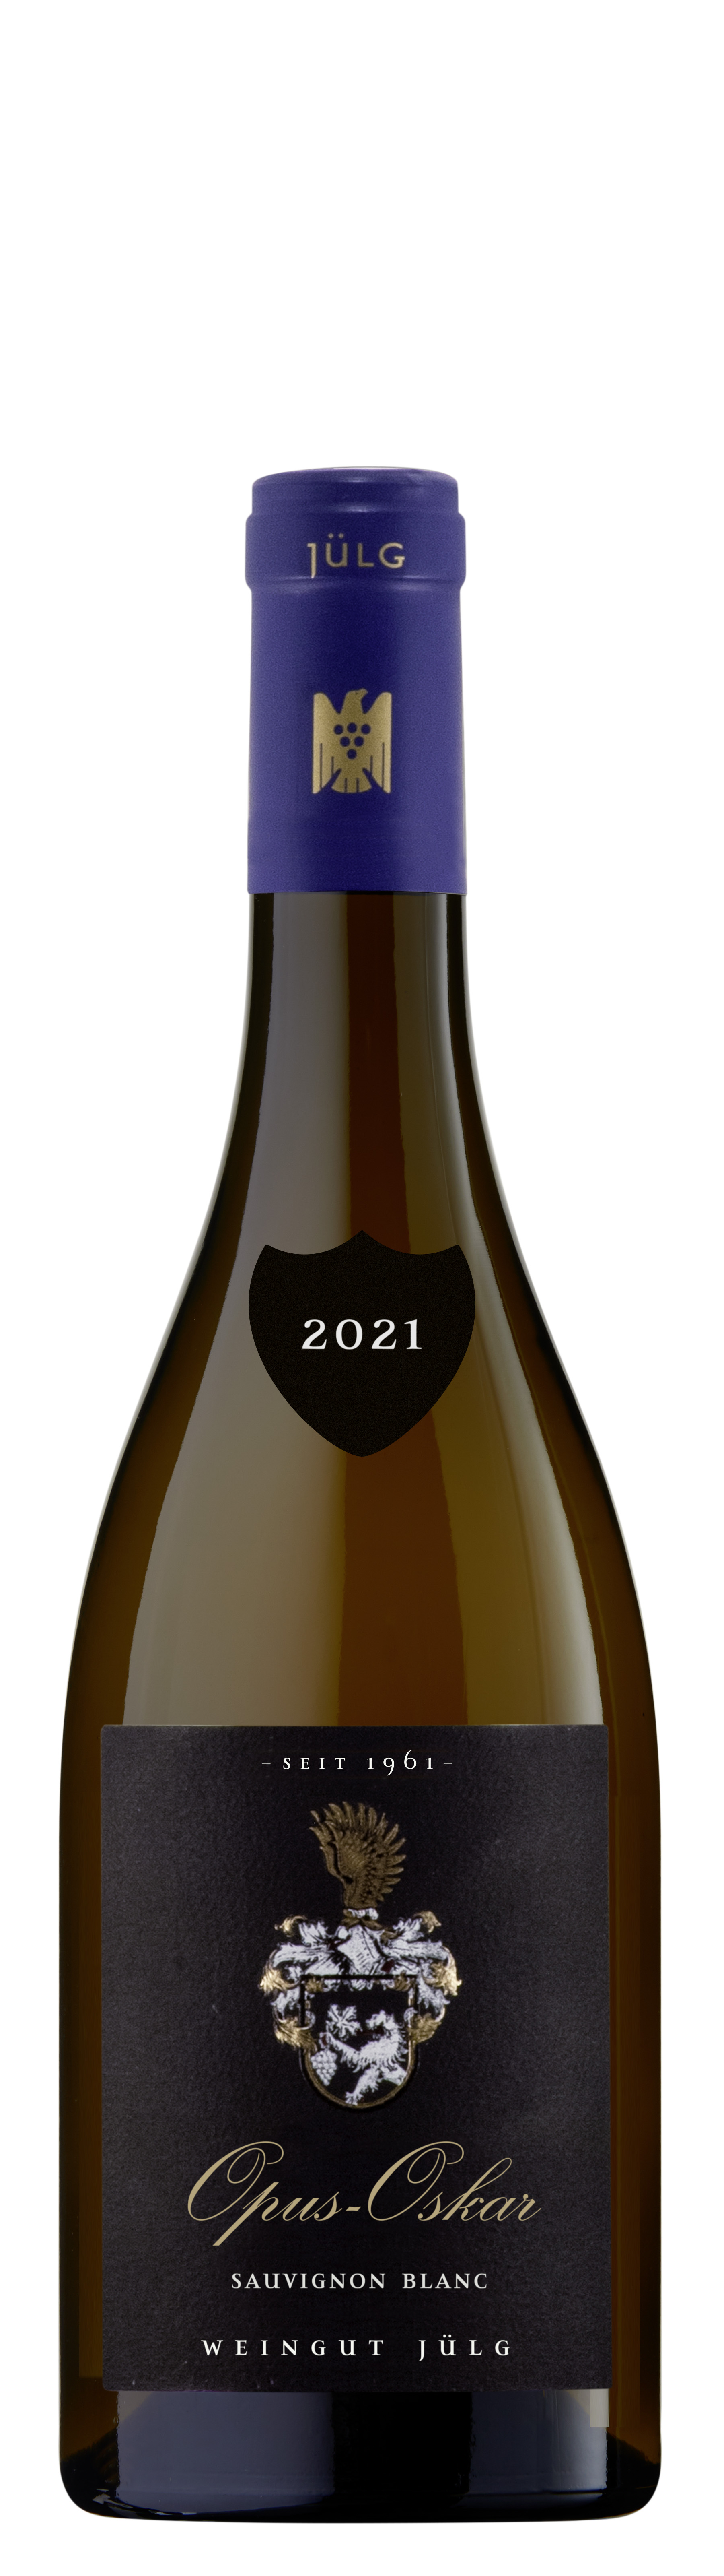 Sauvignon Blanc Opus-Oskar - Jülg 2021